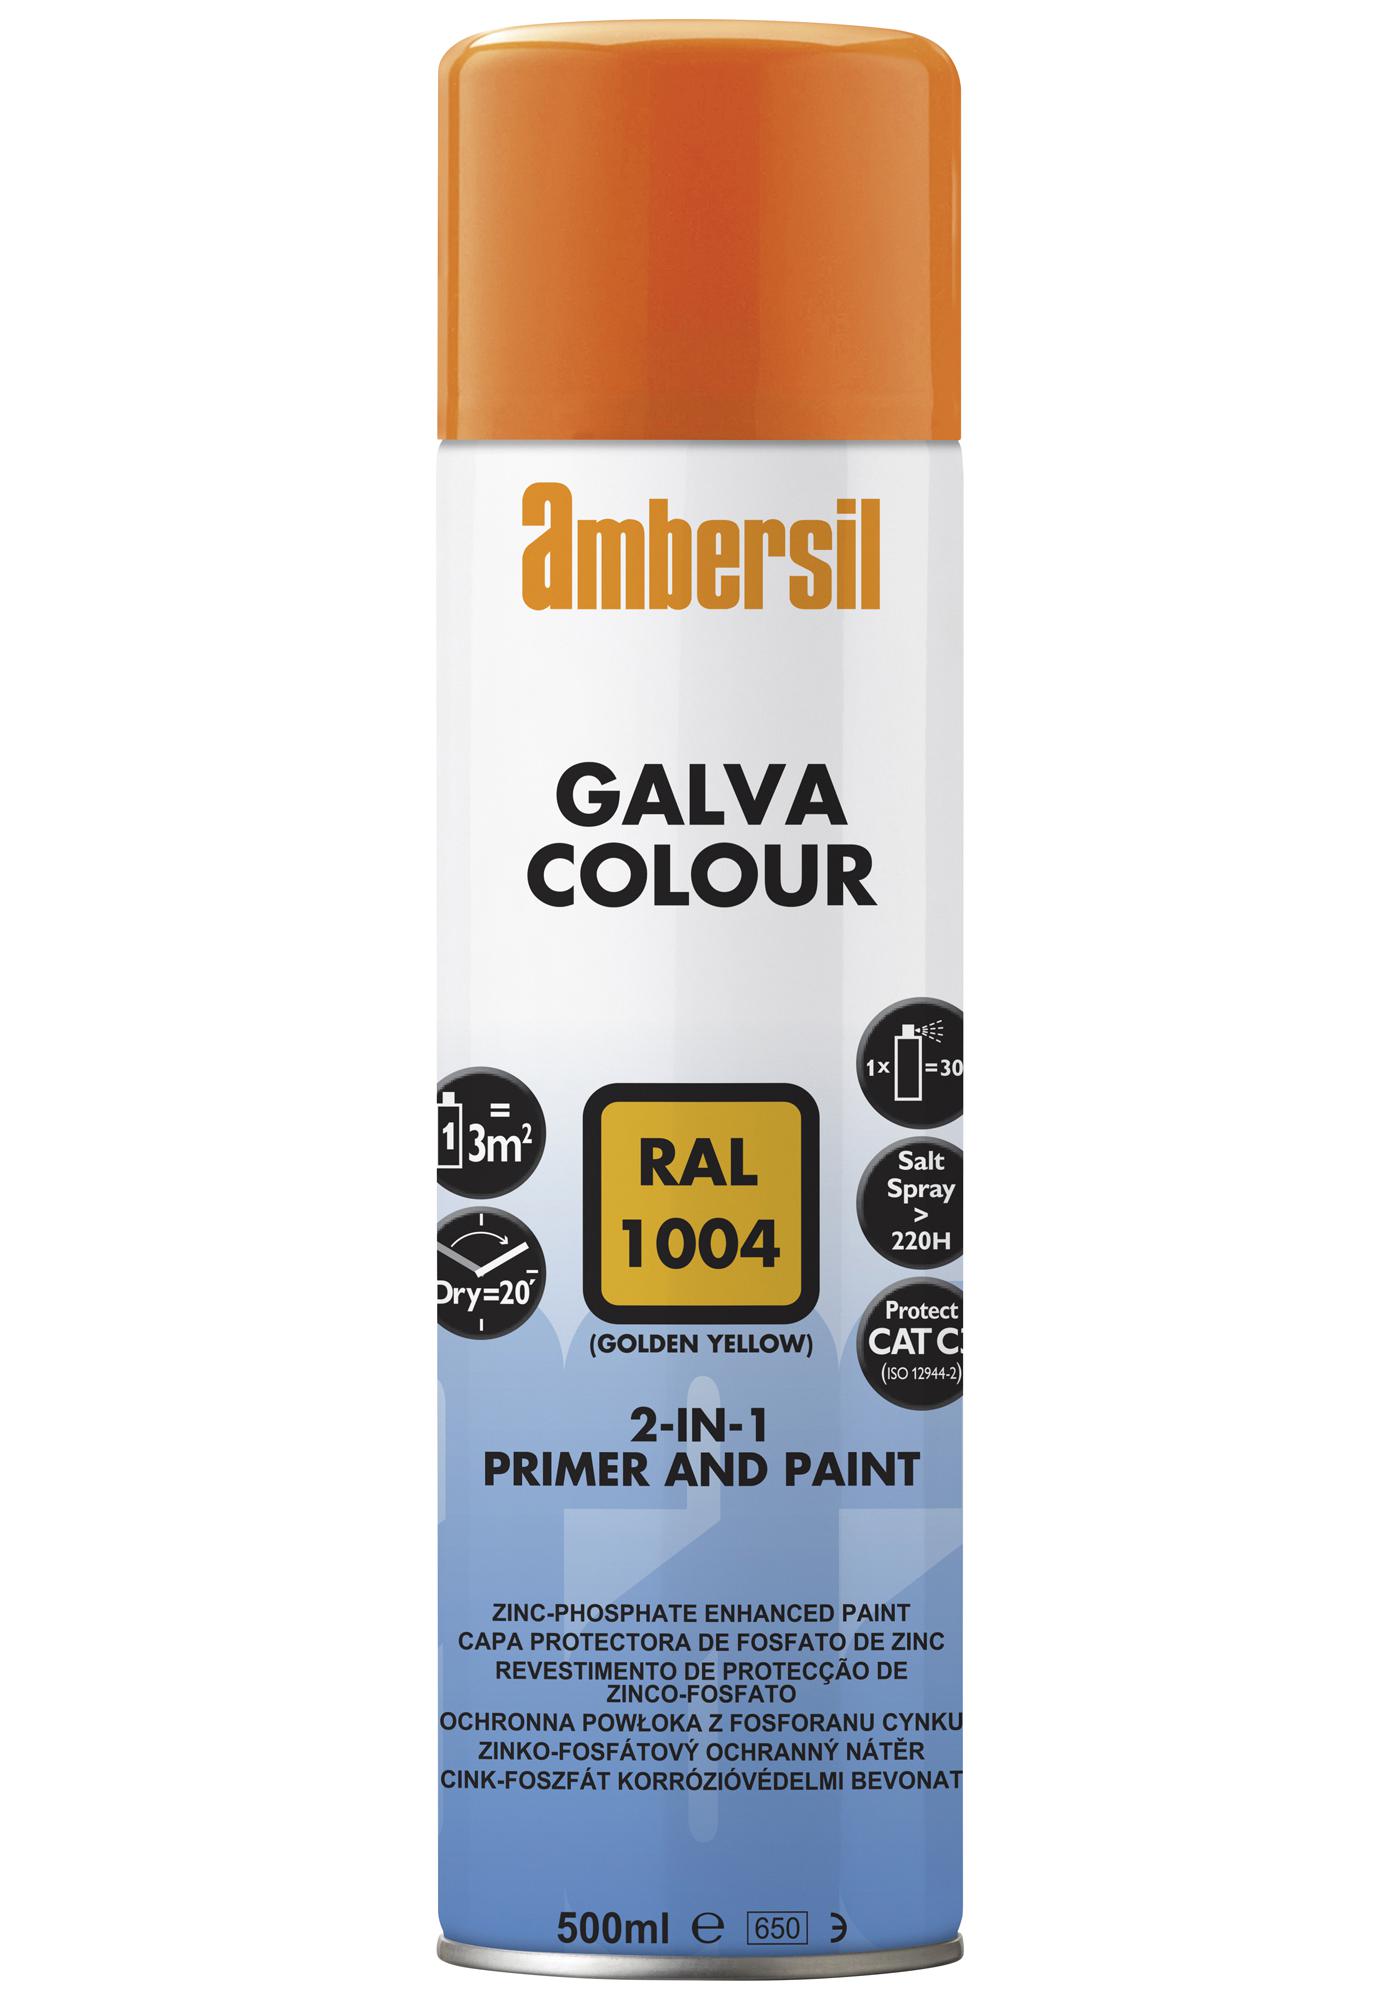 Ambersil Galva Colour Yellow Ral 1004, 500Ml Coating, Aerosol, 500Ml